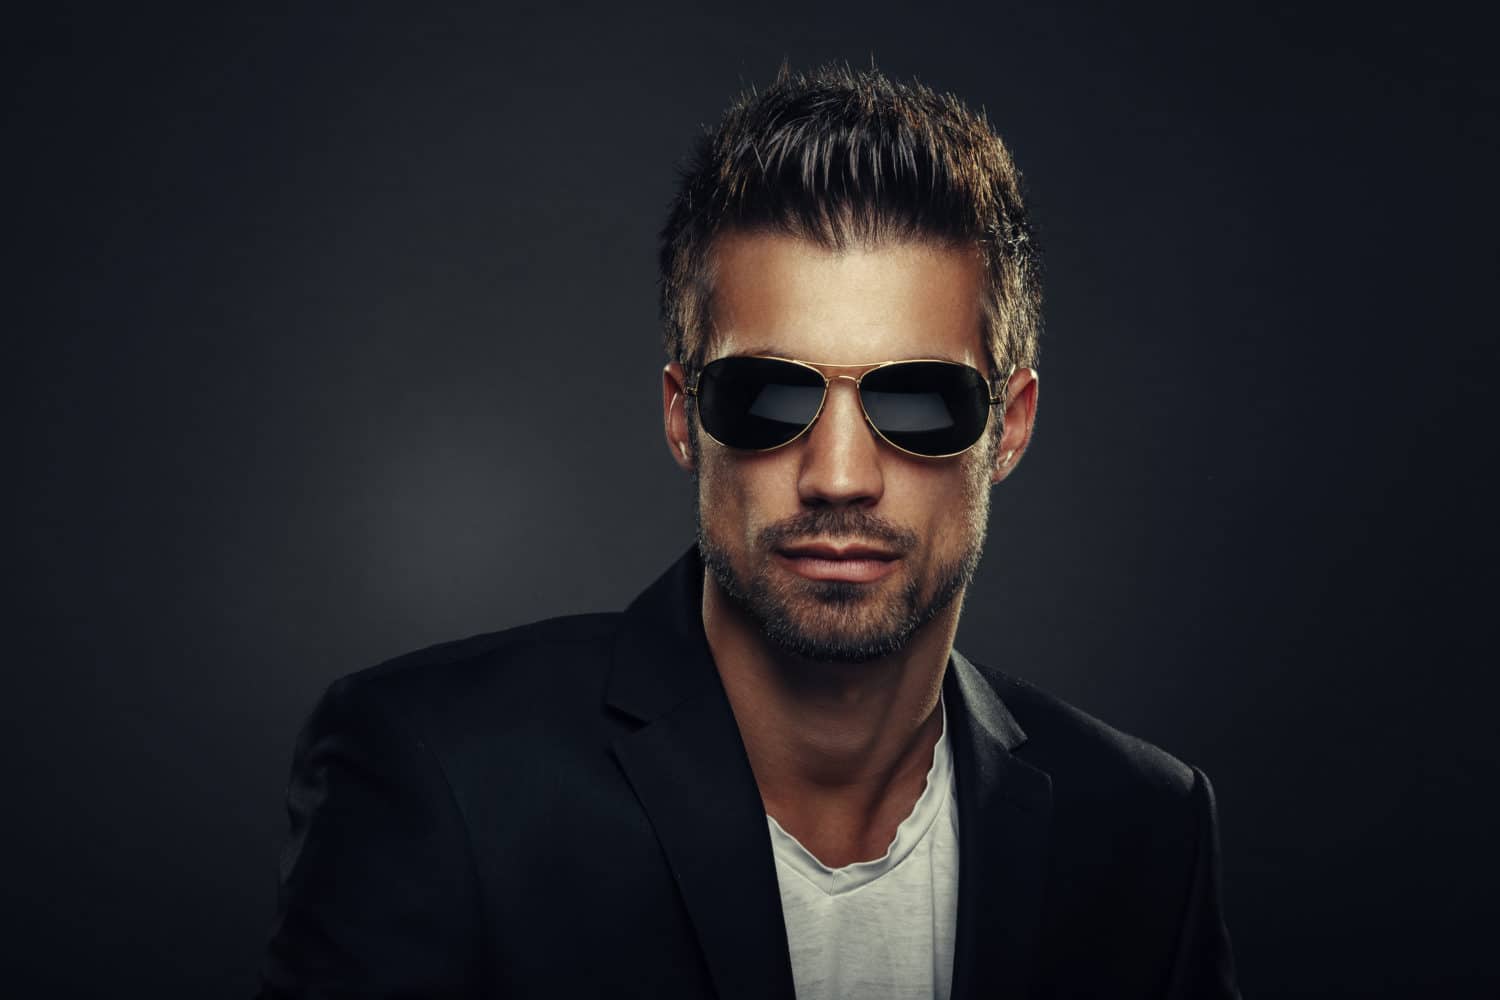 Portrait Of Men With Sunglasses.